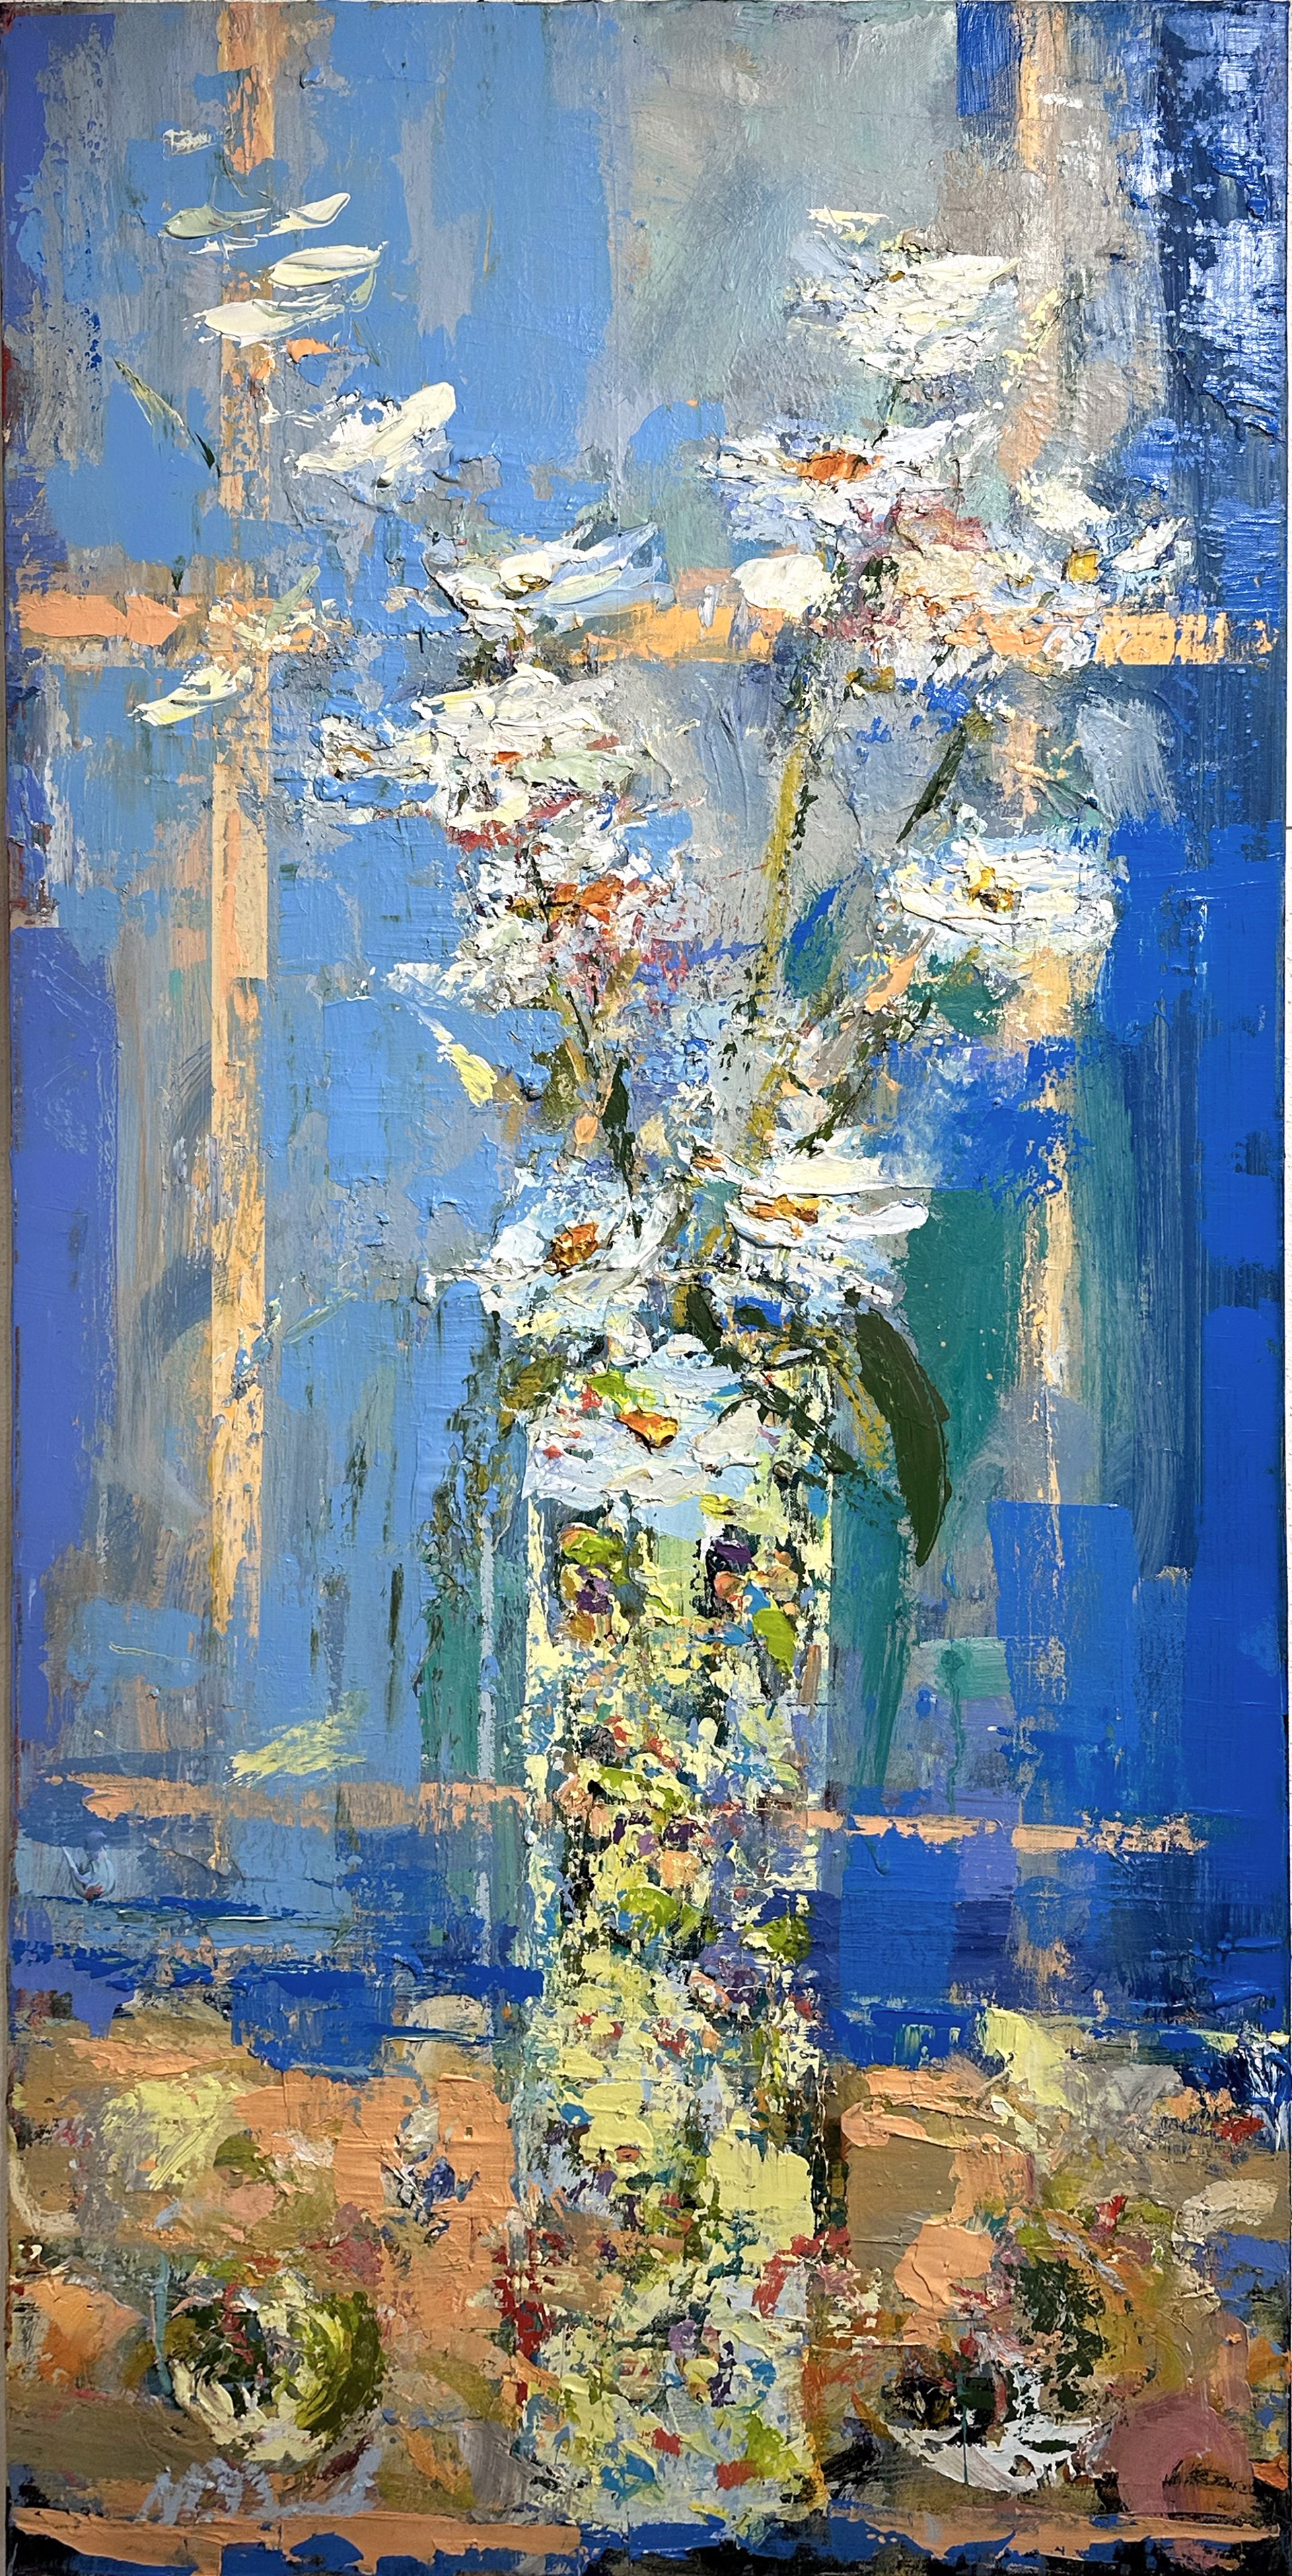 Soft Bouquet (G.O.) by Noah Desmond